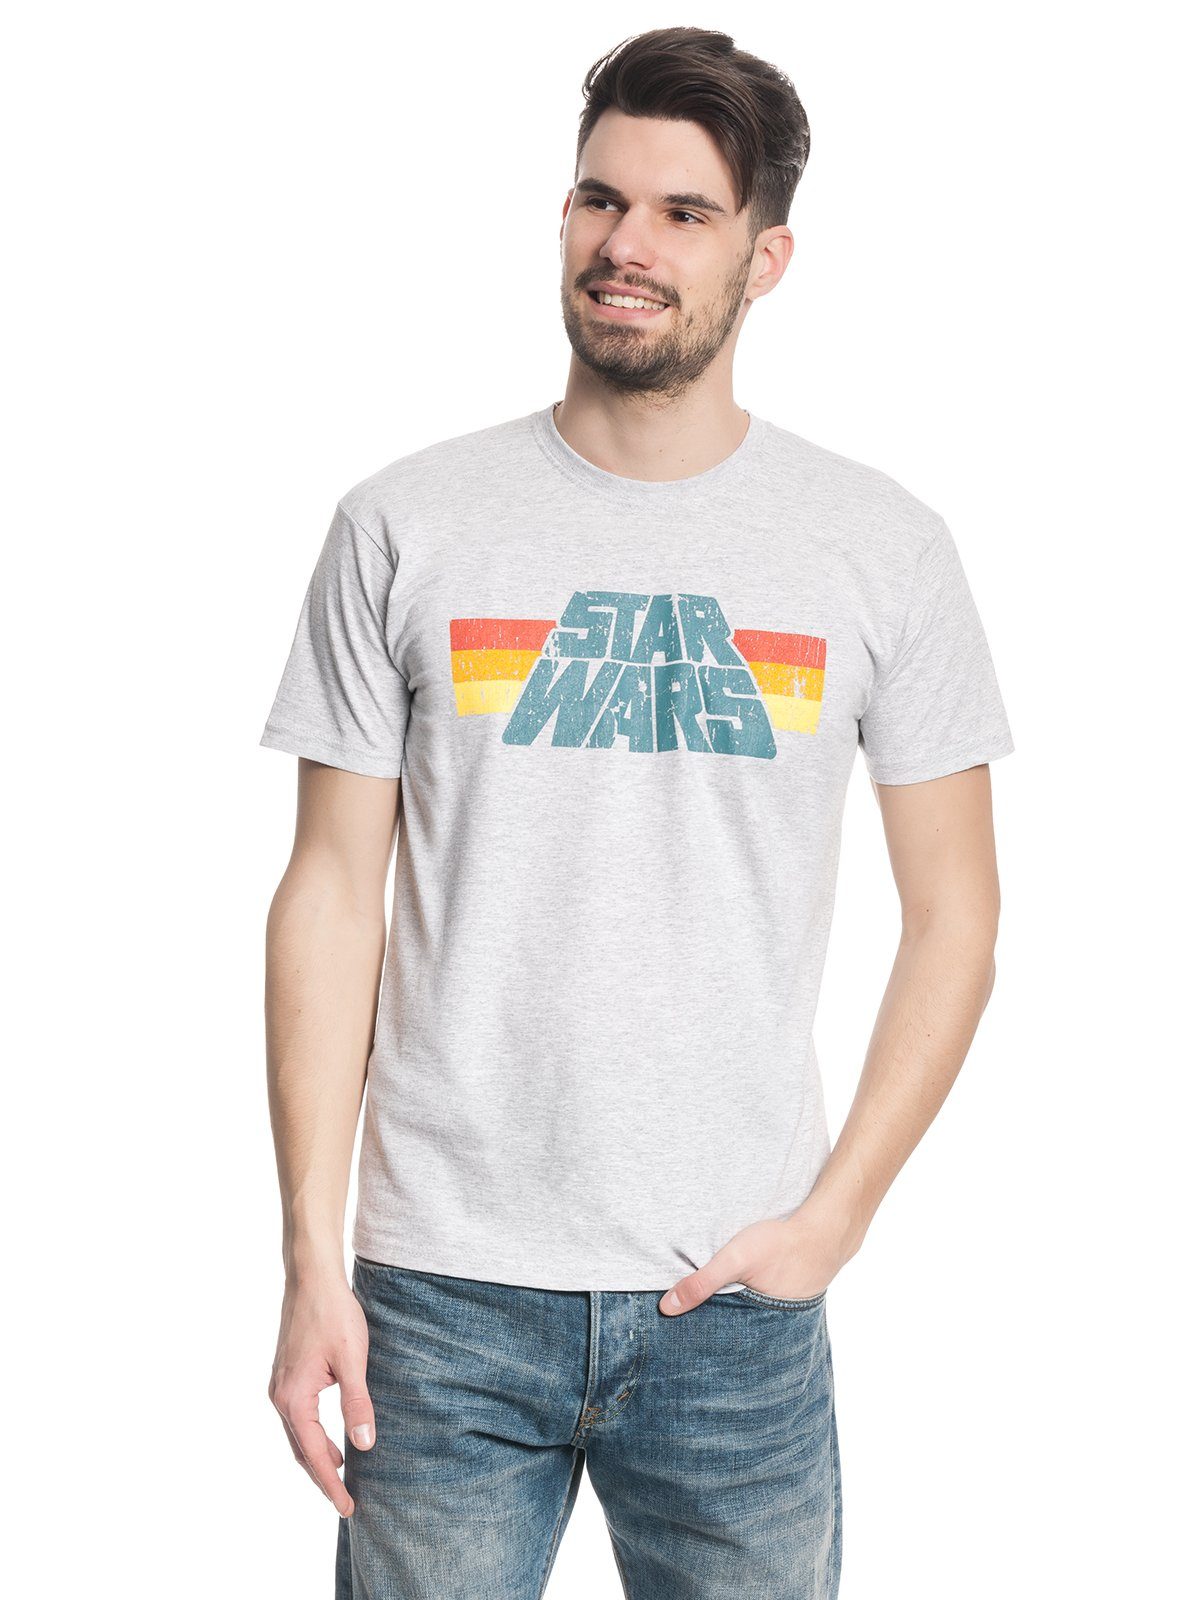 Star Wars T-Shirt Vintage 77